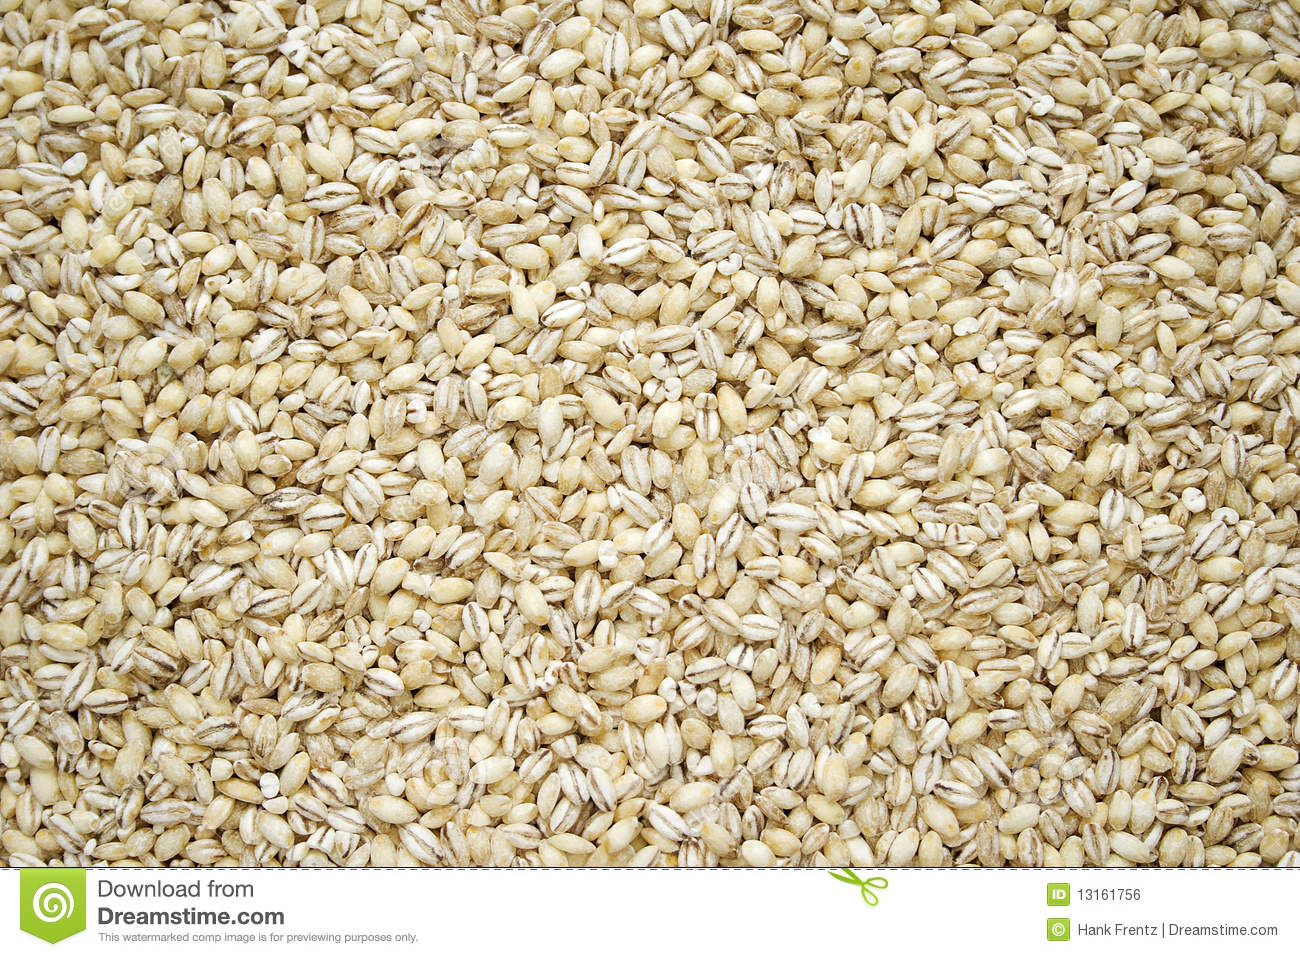 Dried Pearl Barley Royalty Free Stock Image   Image  13161756